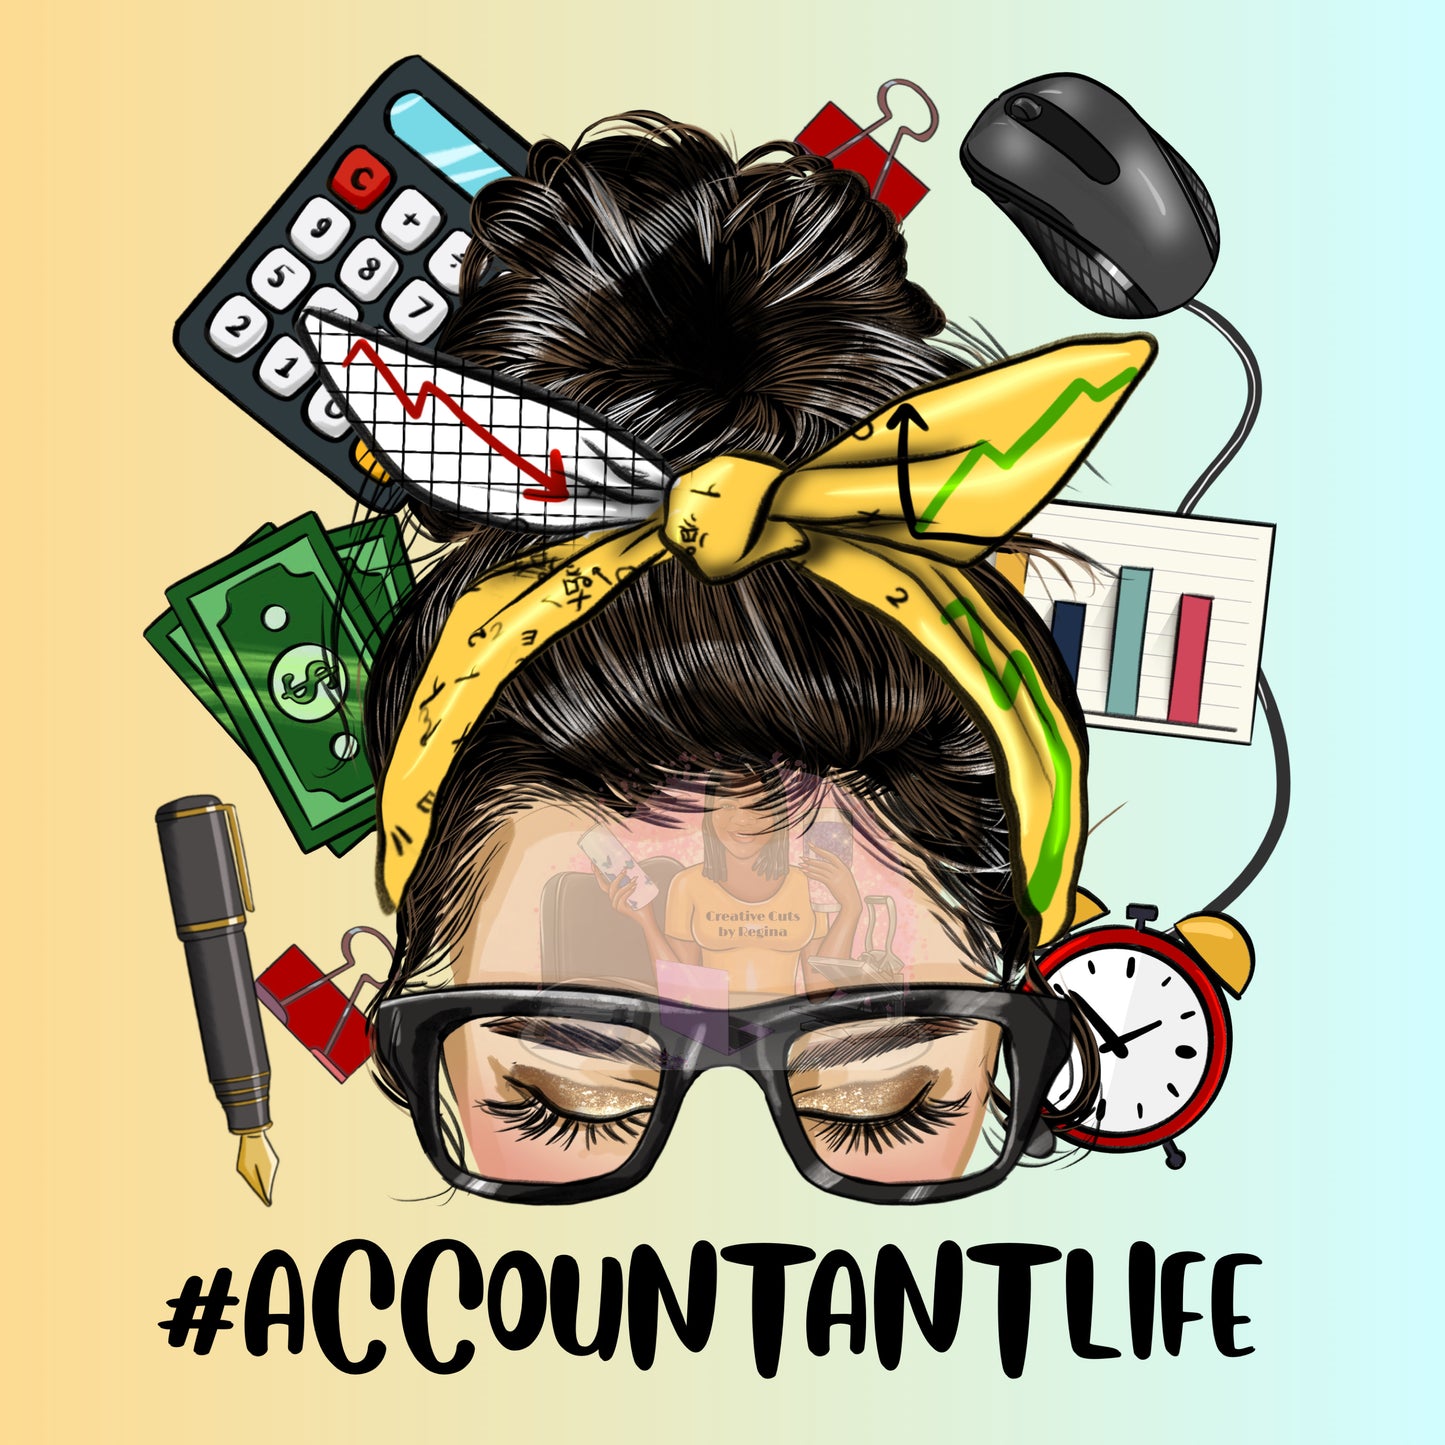 Accountant_Life 3